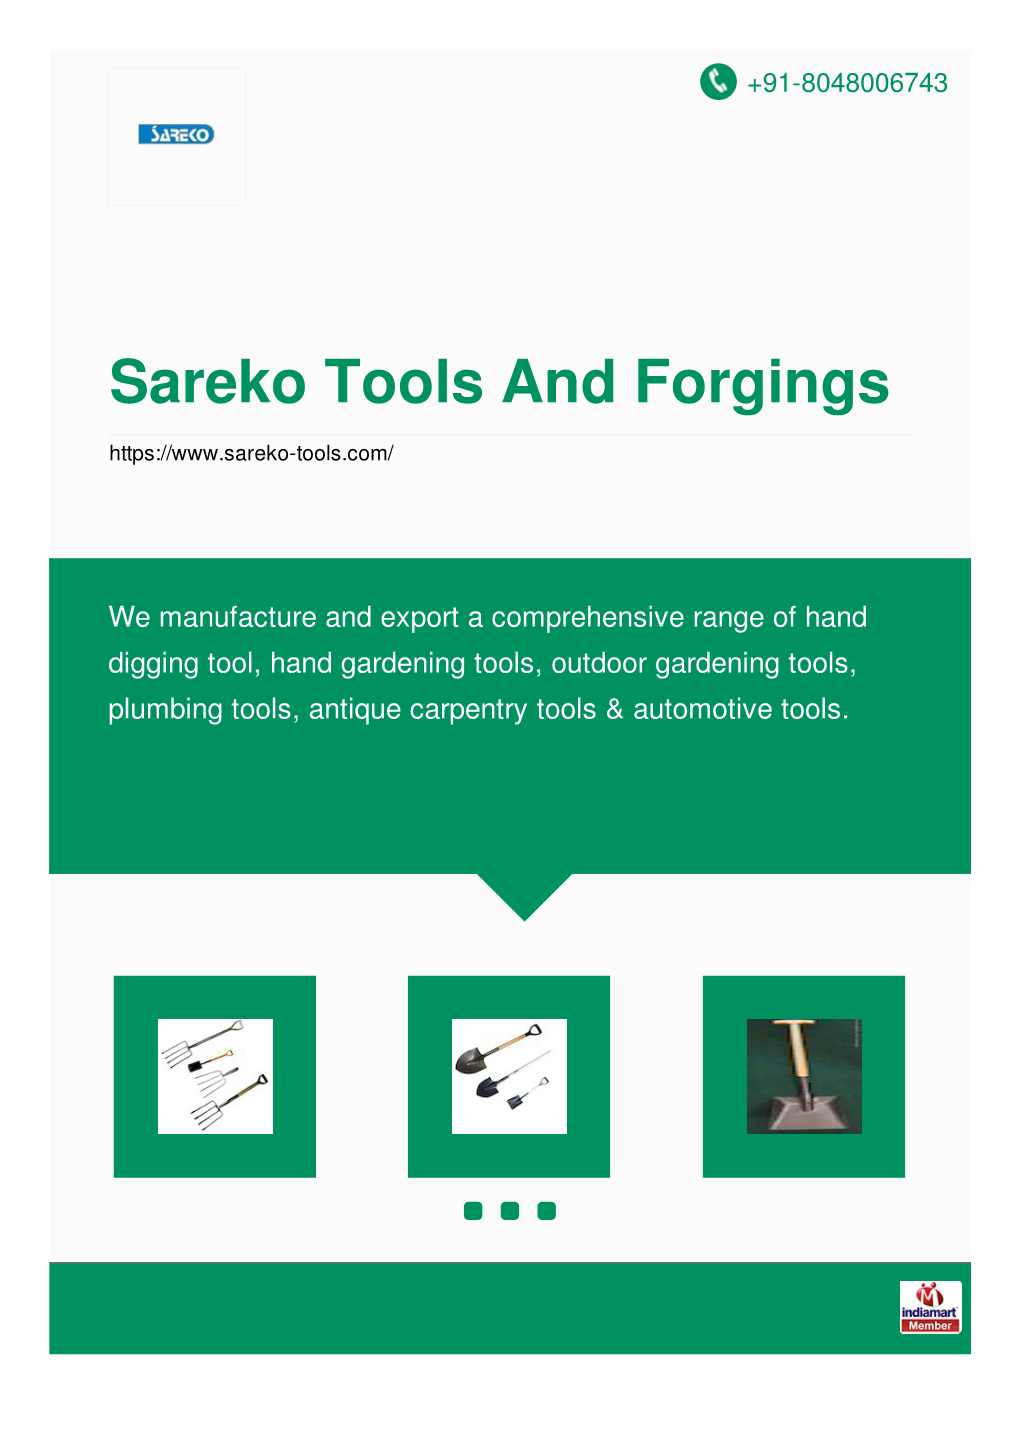 Carpentry Tools & Automotive Tools